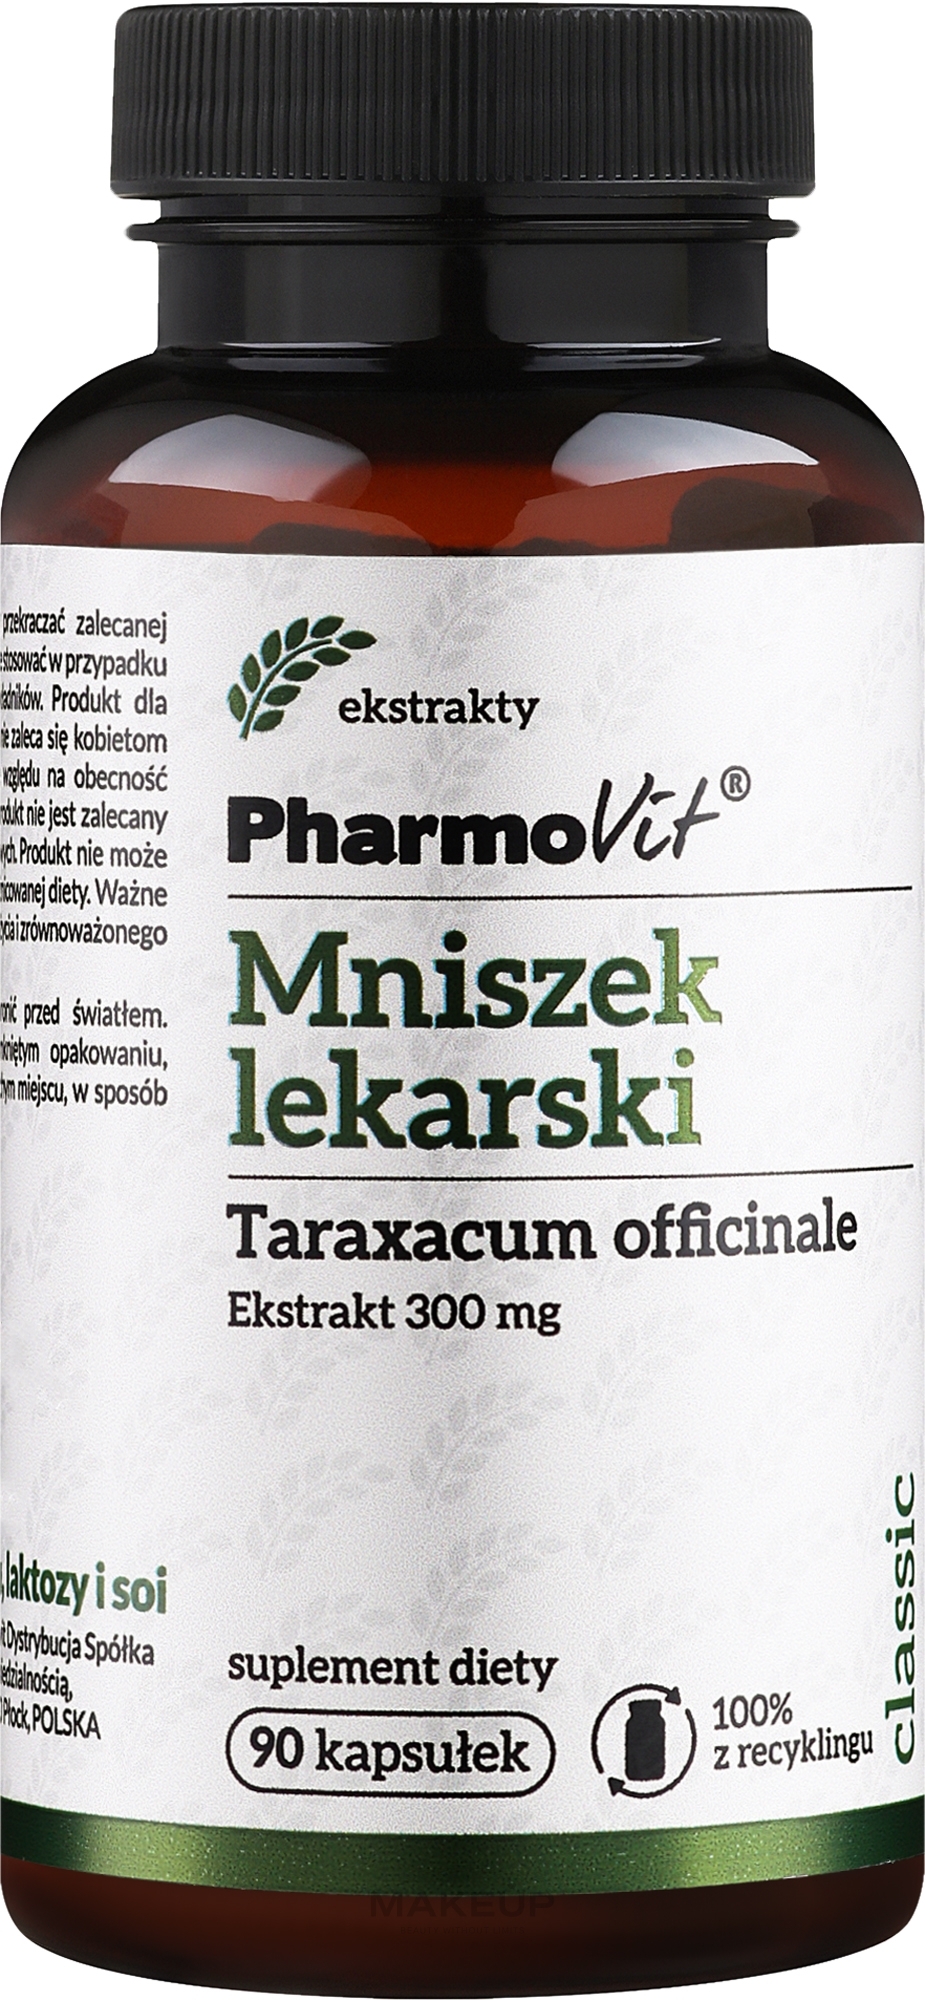 Dietary Supplement 'Dandelion Extract', 300 mg - PharmoVit Classic Taraxacum Officinale — photo 90 szt.